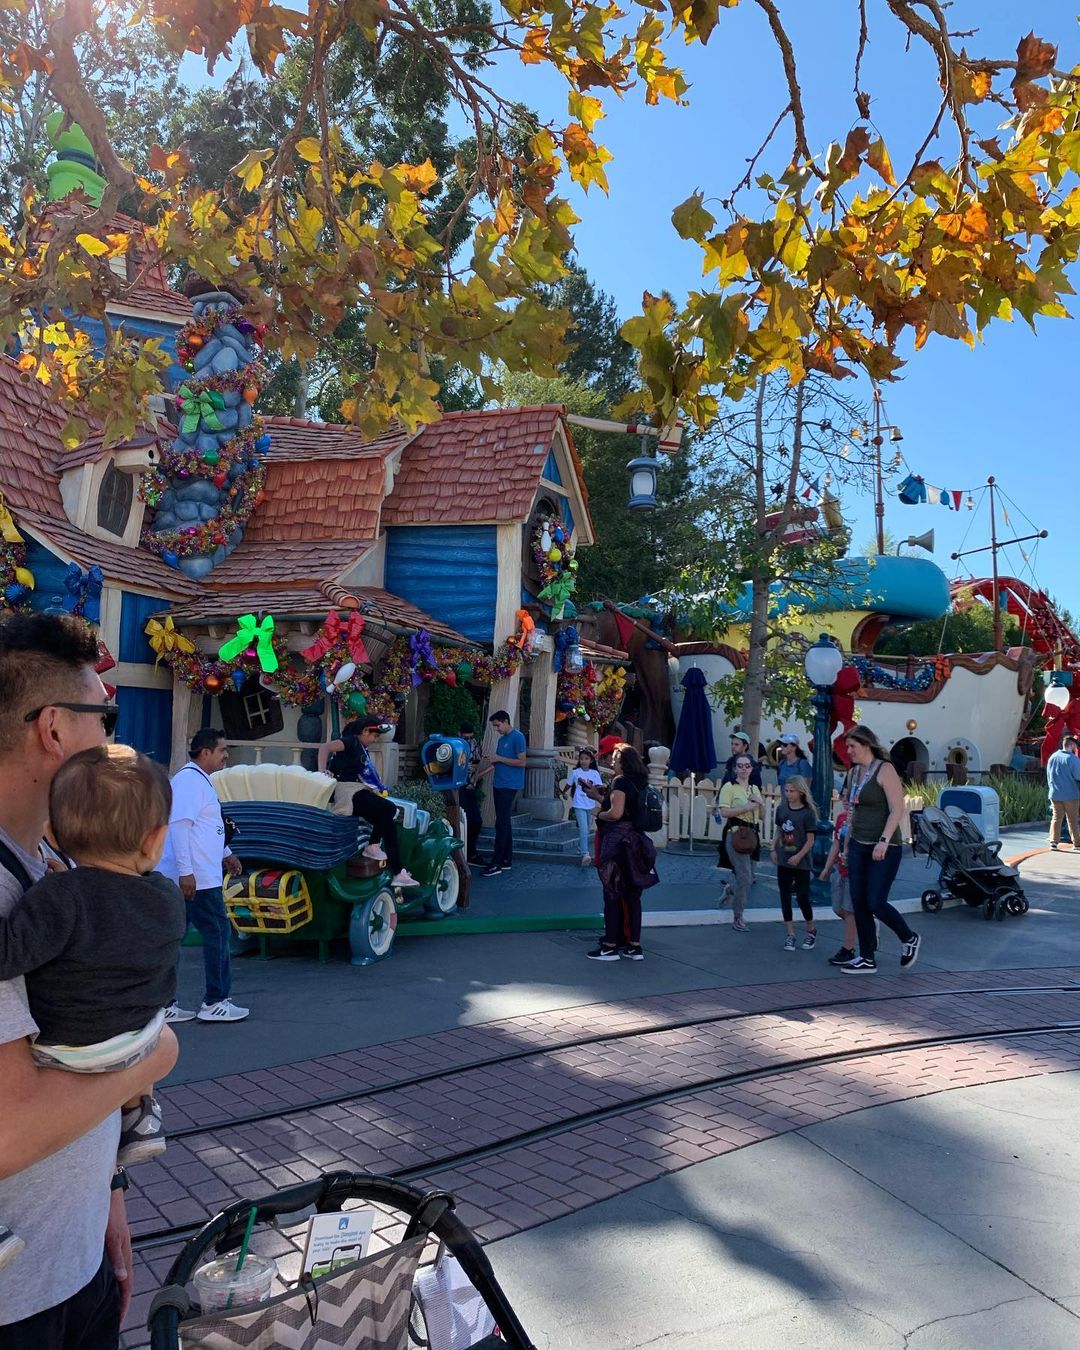 Mickey's ToonTown na Disneyland California